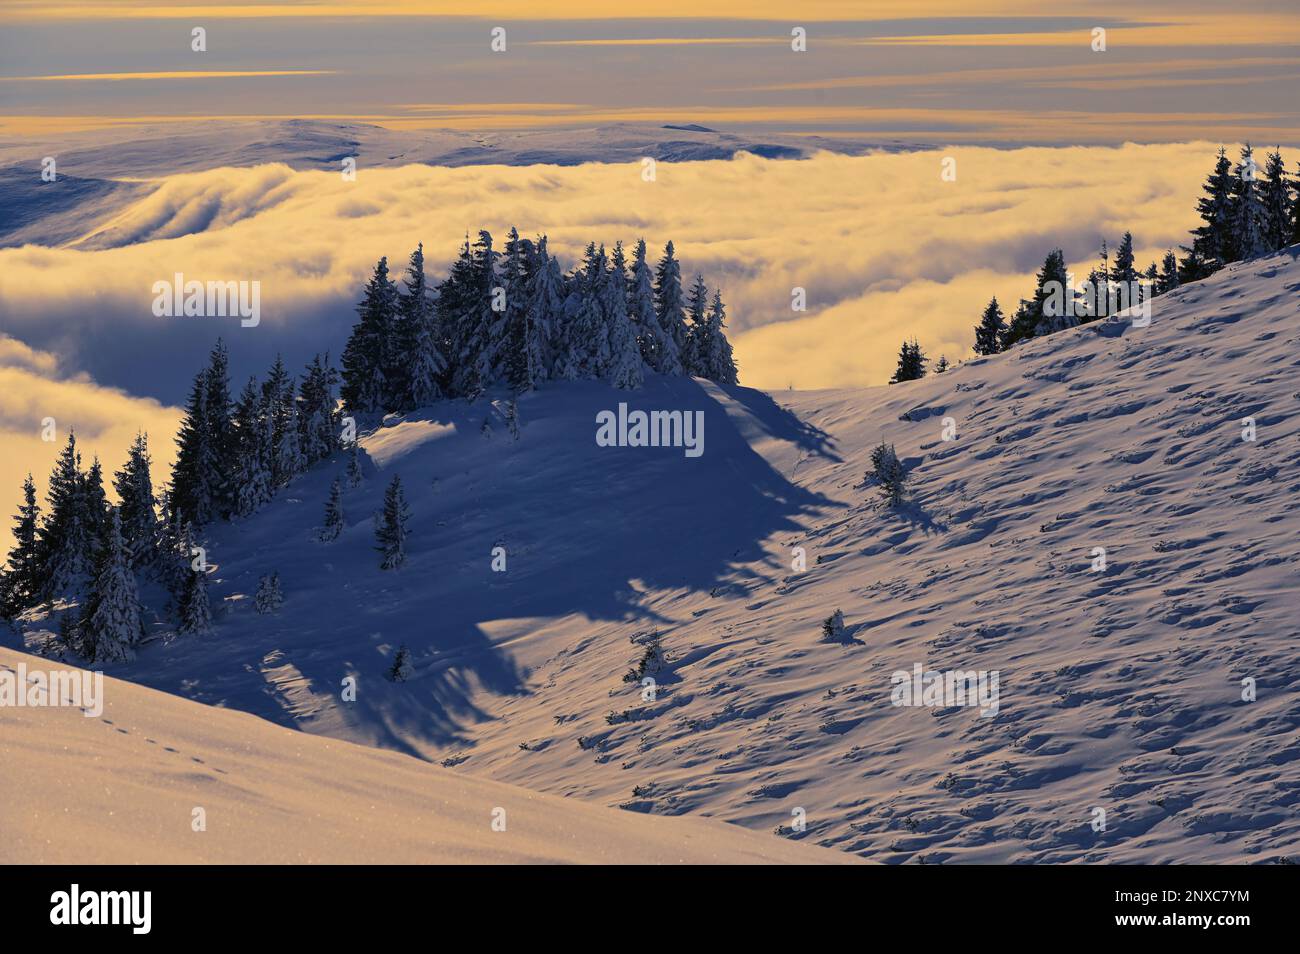 Trees in Winter Mist in Ciucas Mountains, Romania Stock Photo